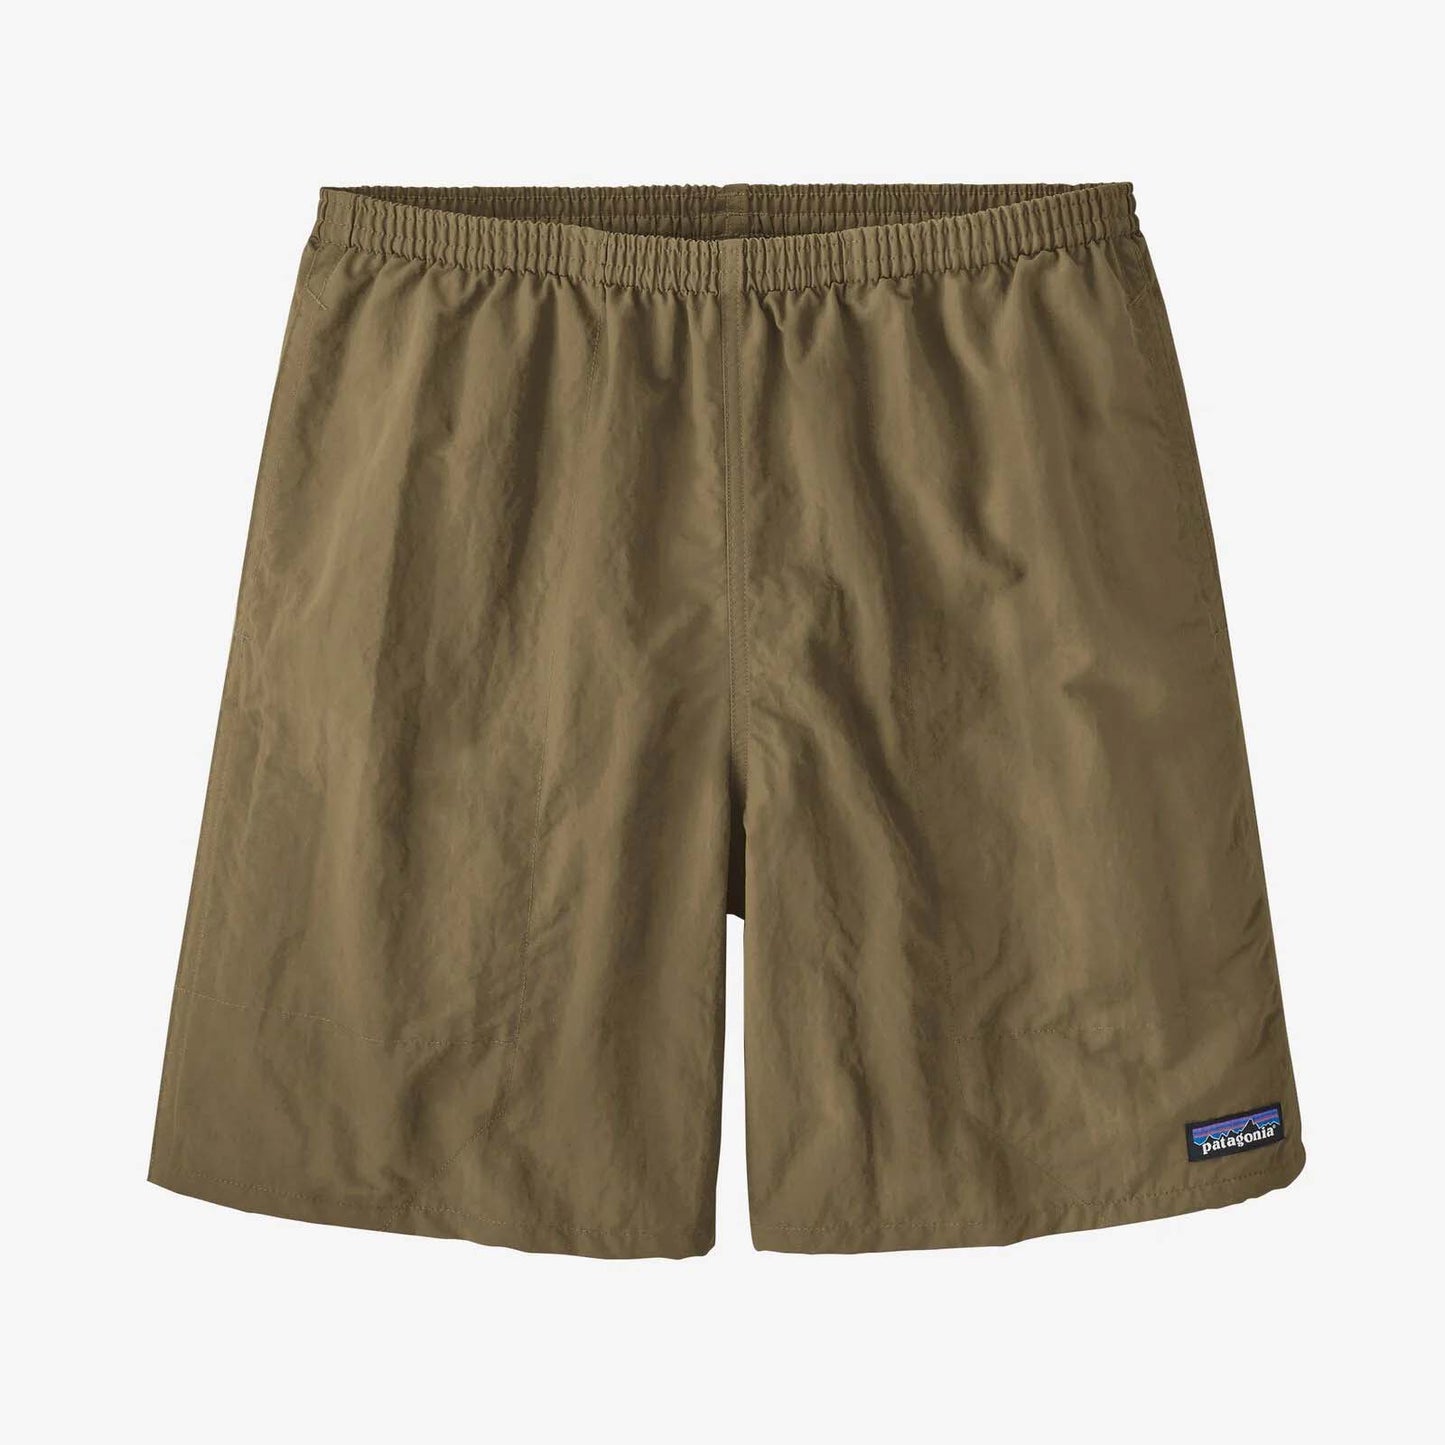 Patagonia Men Baggies Shorts with 7 inch Inseam in Dark Ash